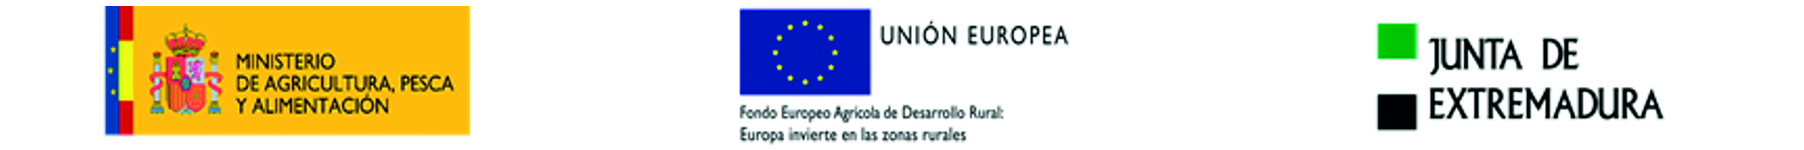 LOGO UNION EUROPEA - JUNTA DE EXTREMADURA - MINISTERIO DE AGRICULTURA, PESCA Y ALIMENTACION